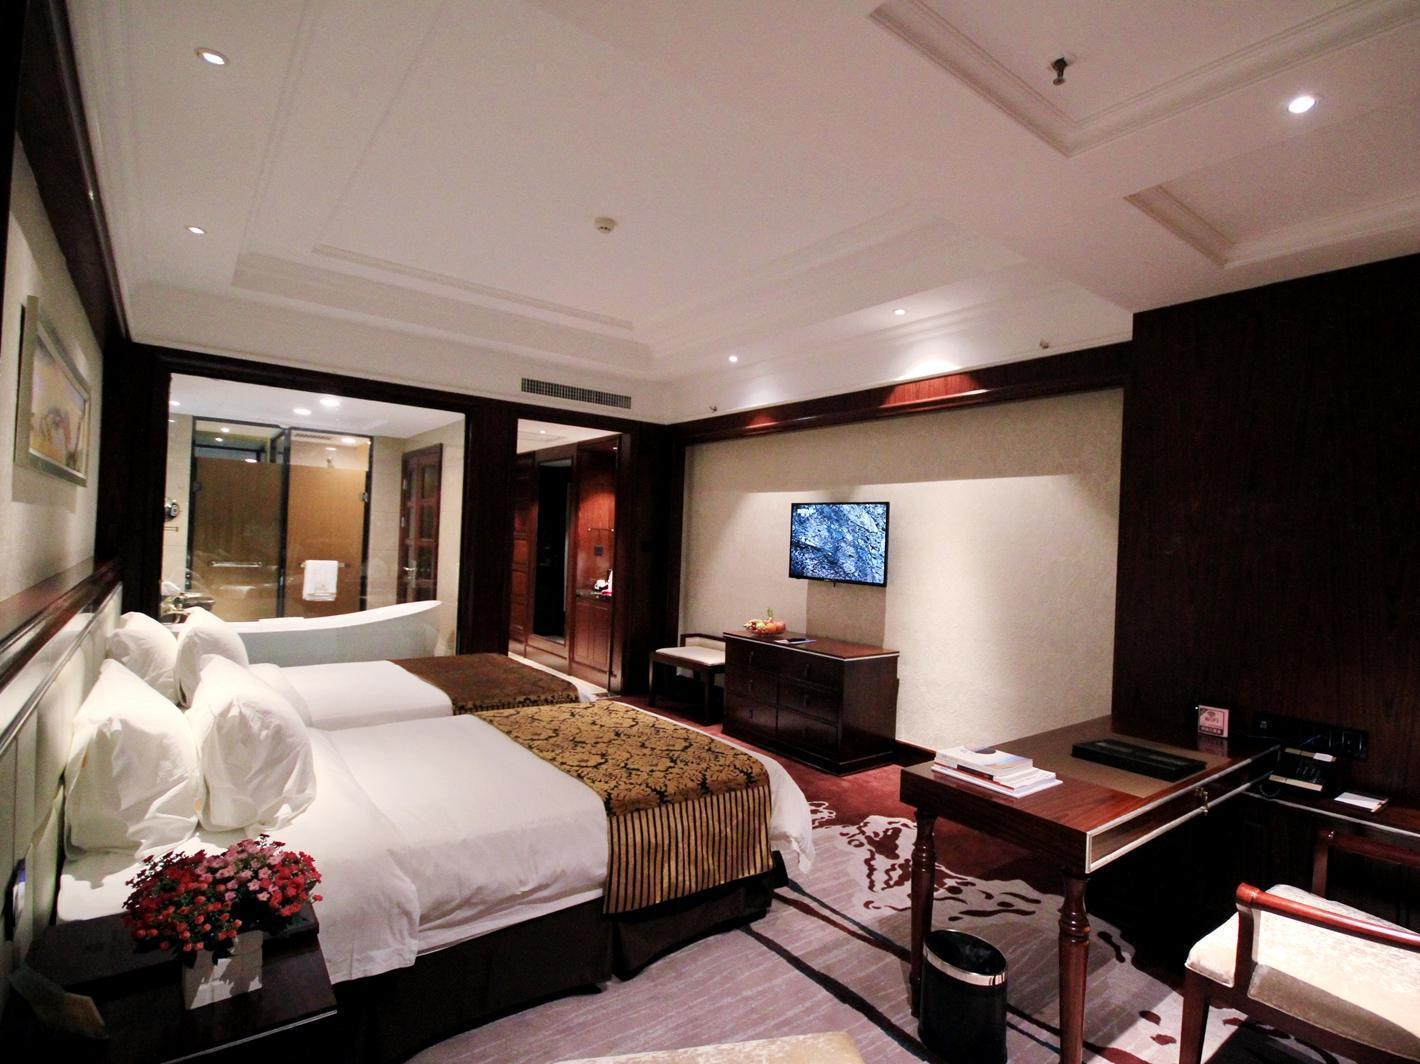 Bedroom 2, Chateau Star Sea Hotel, Zhanjiang